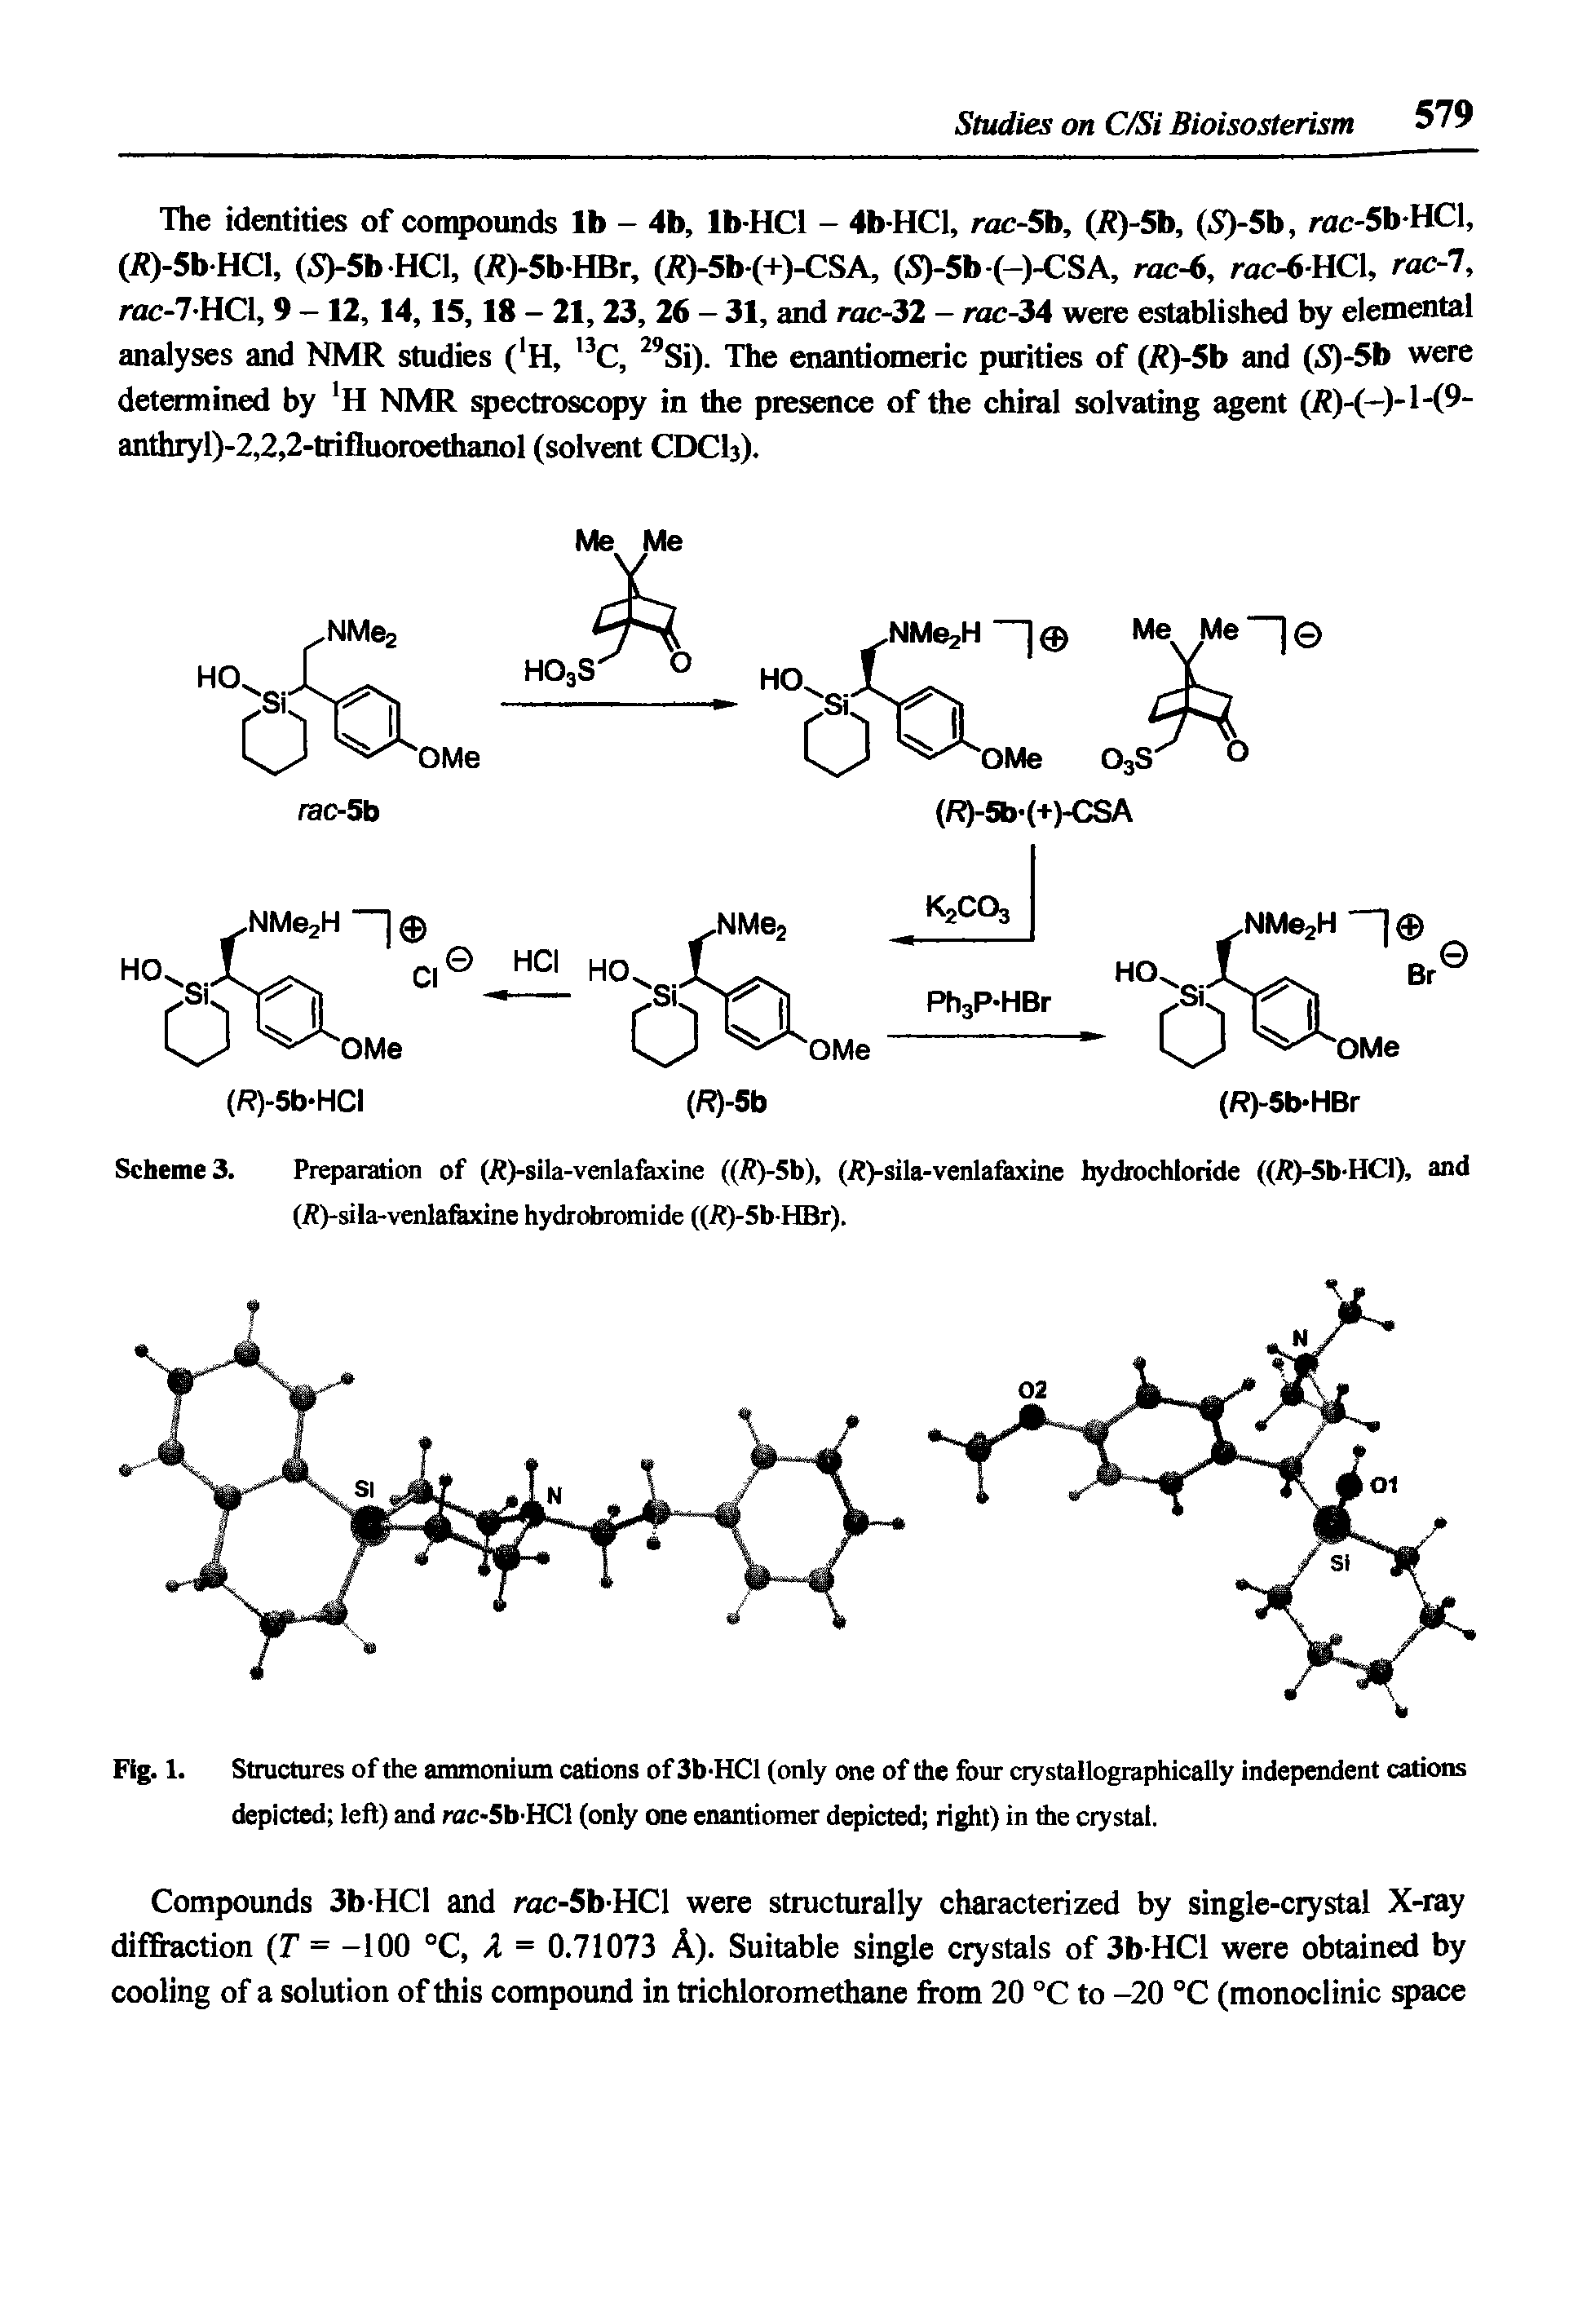 Scheme 3. Preparation of (/J)-sila-venlafaxine ((/f)-5b), (/i)-sila-venlafaxine hydrochloride ((/t)-5b-HCl), and (/ )-sila-venlafexine hydrobromide ((/ )-5b-HBr).